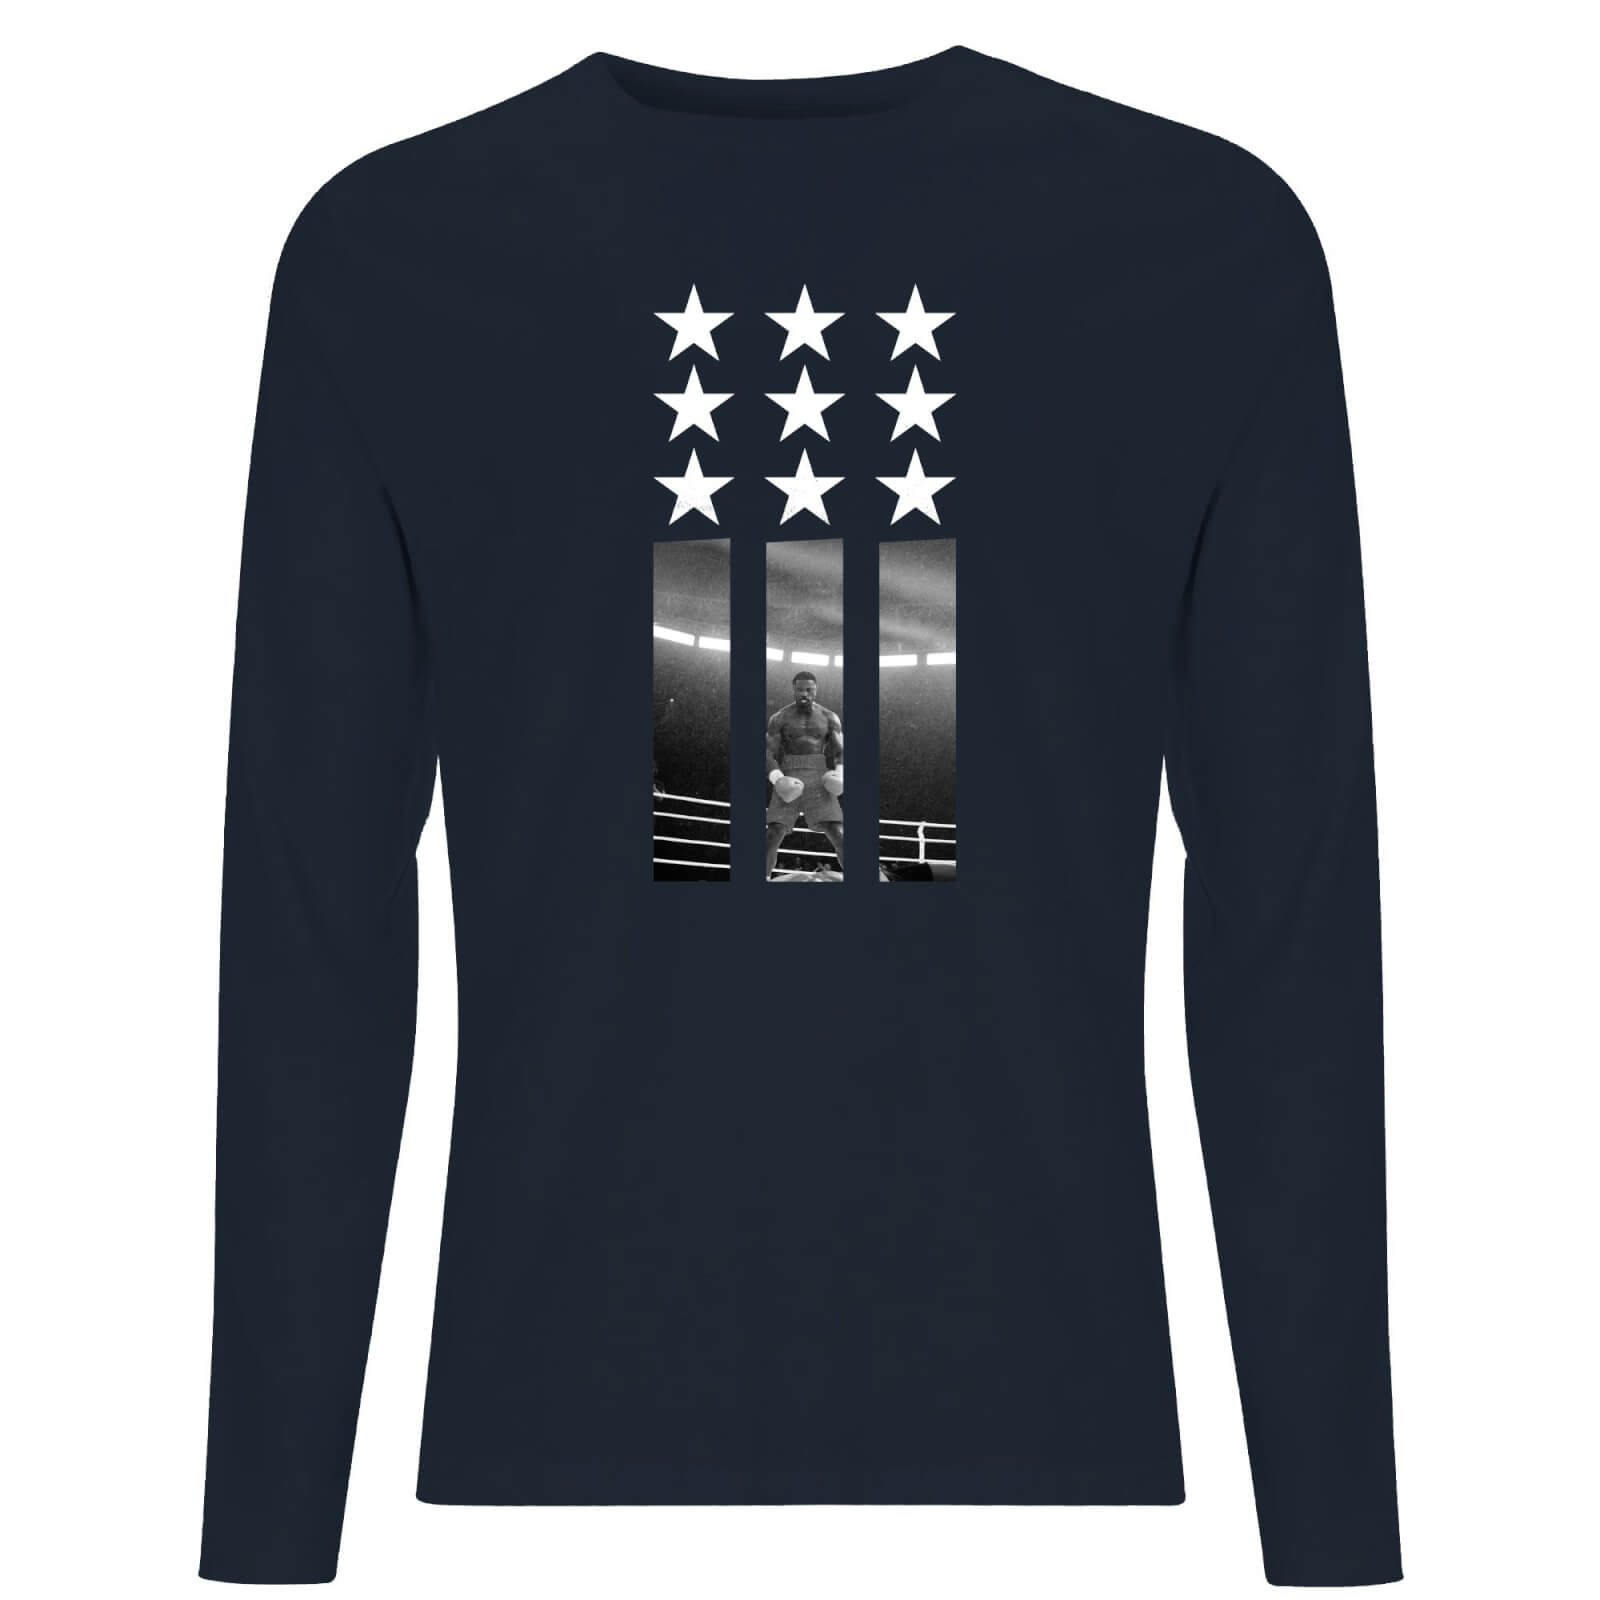 Creed Poster Stars Men's Long Sleeve T-Shirt - Navy - S